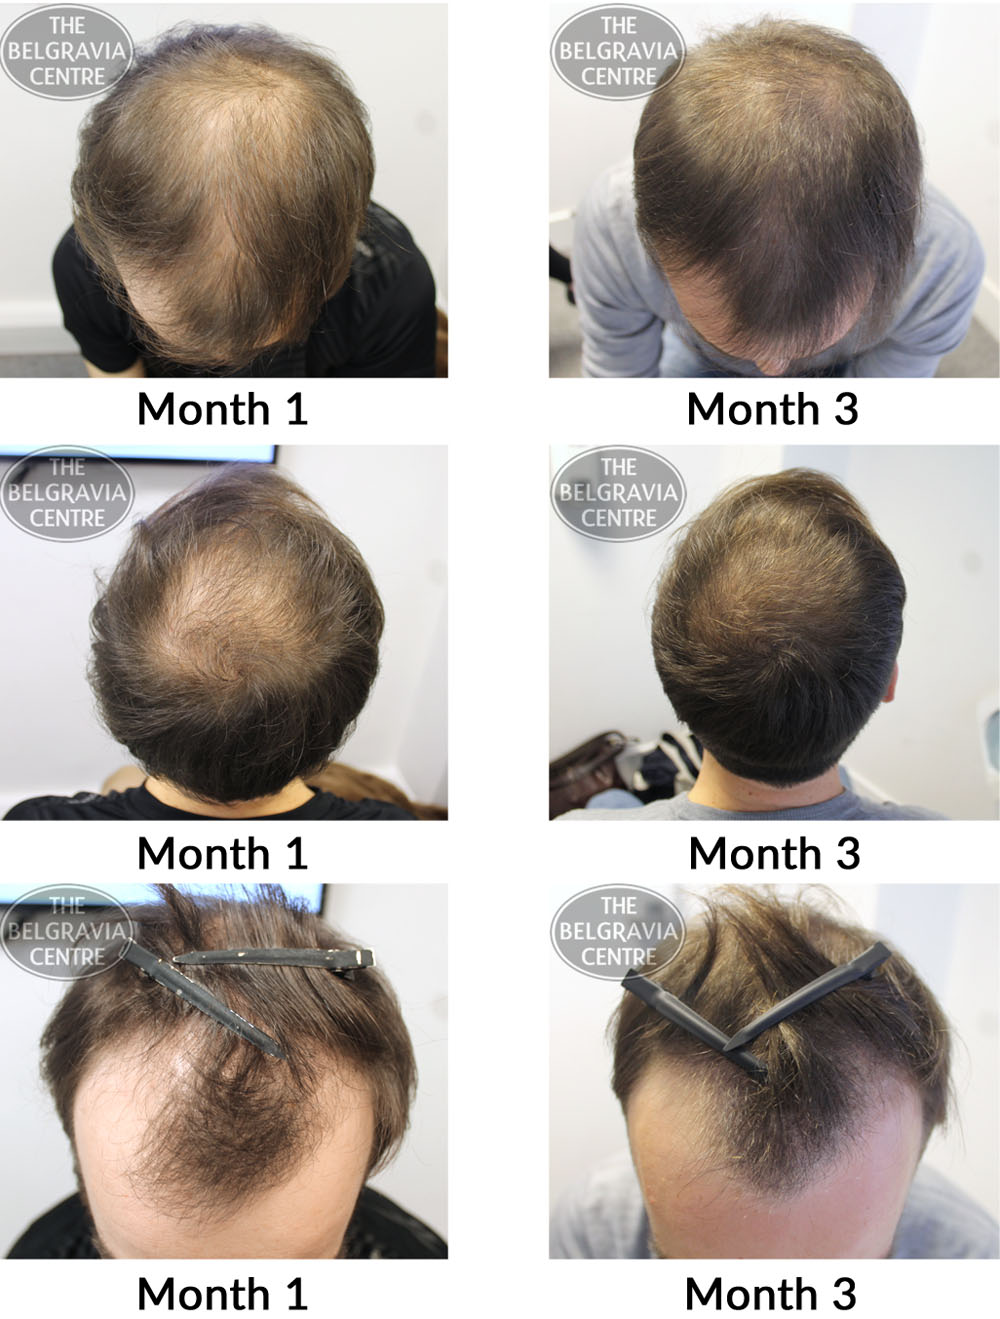 male pattern hair loss the belgravia centre 21 04 17